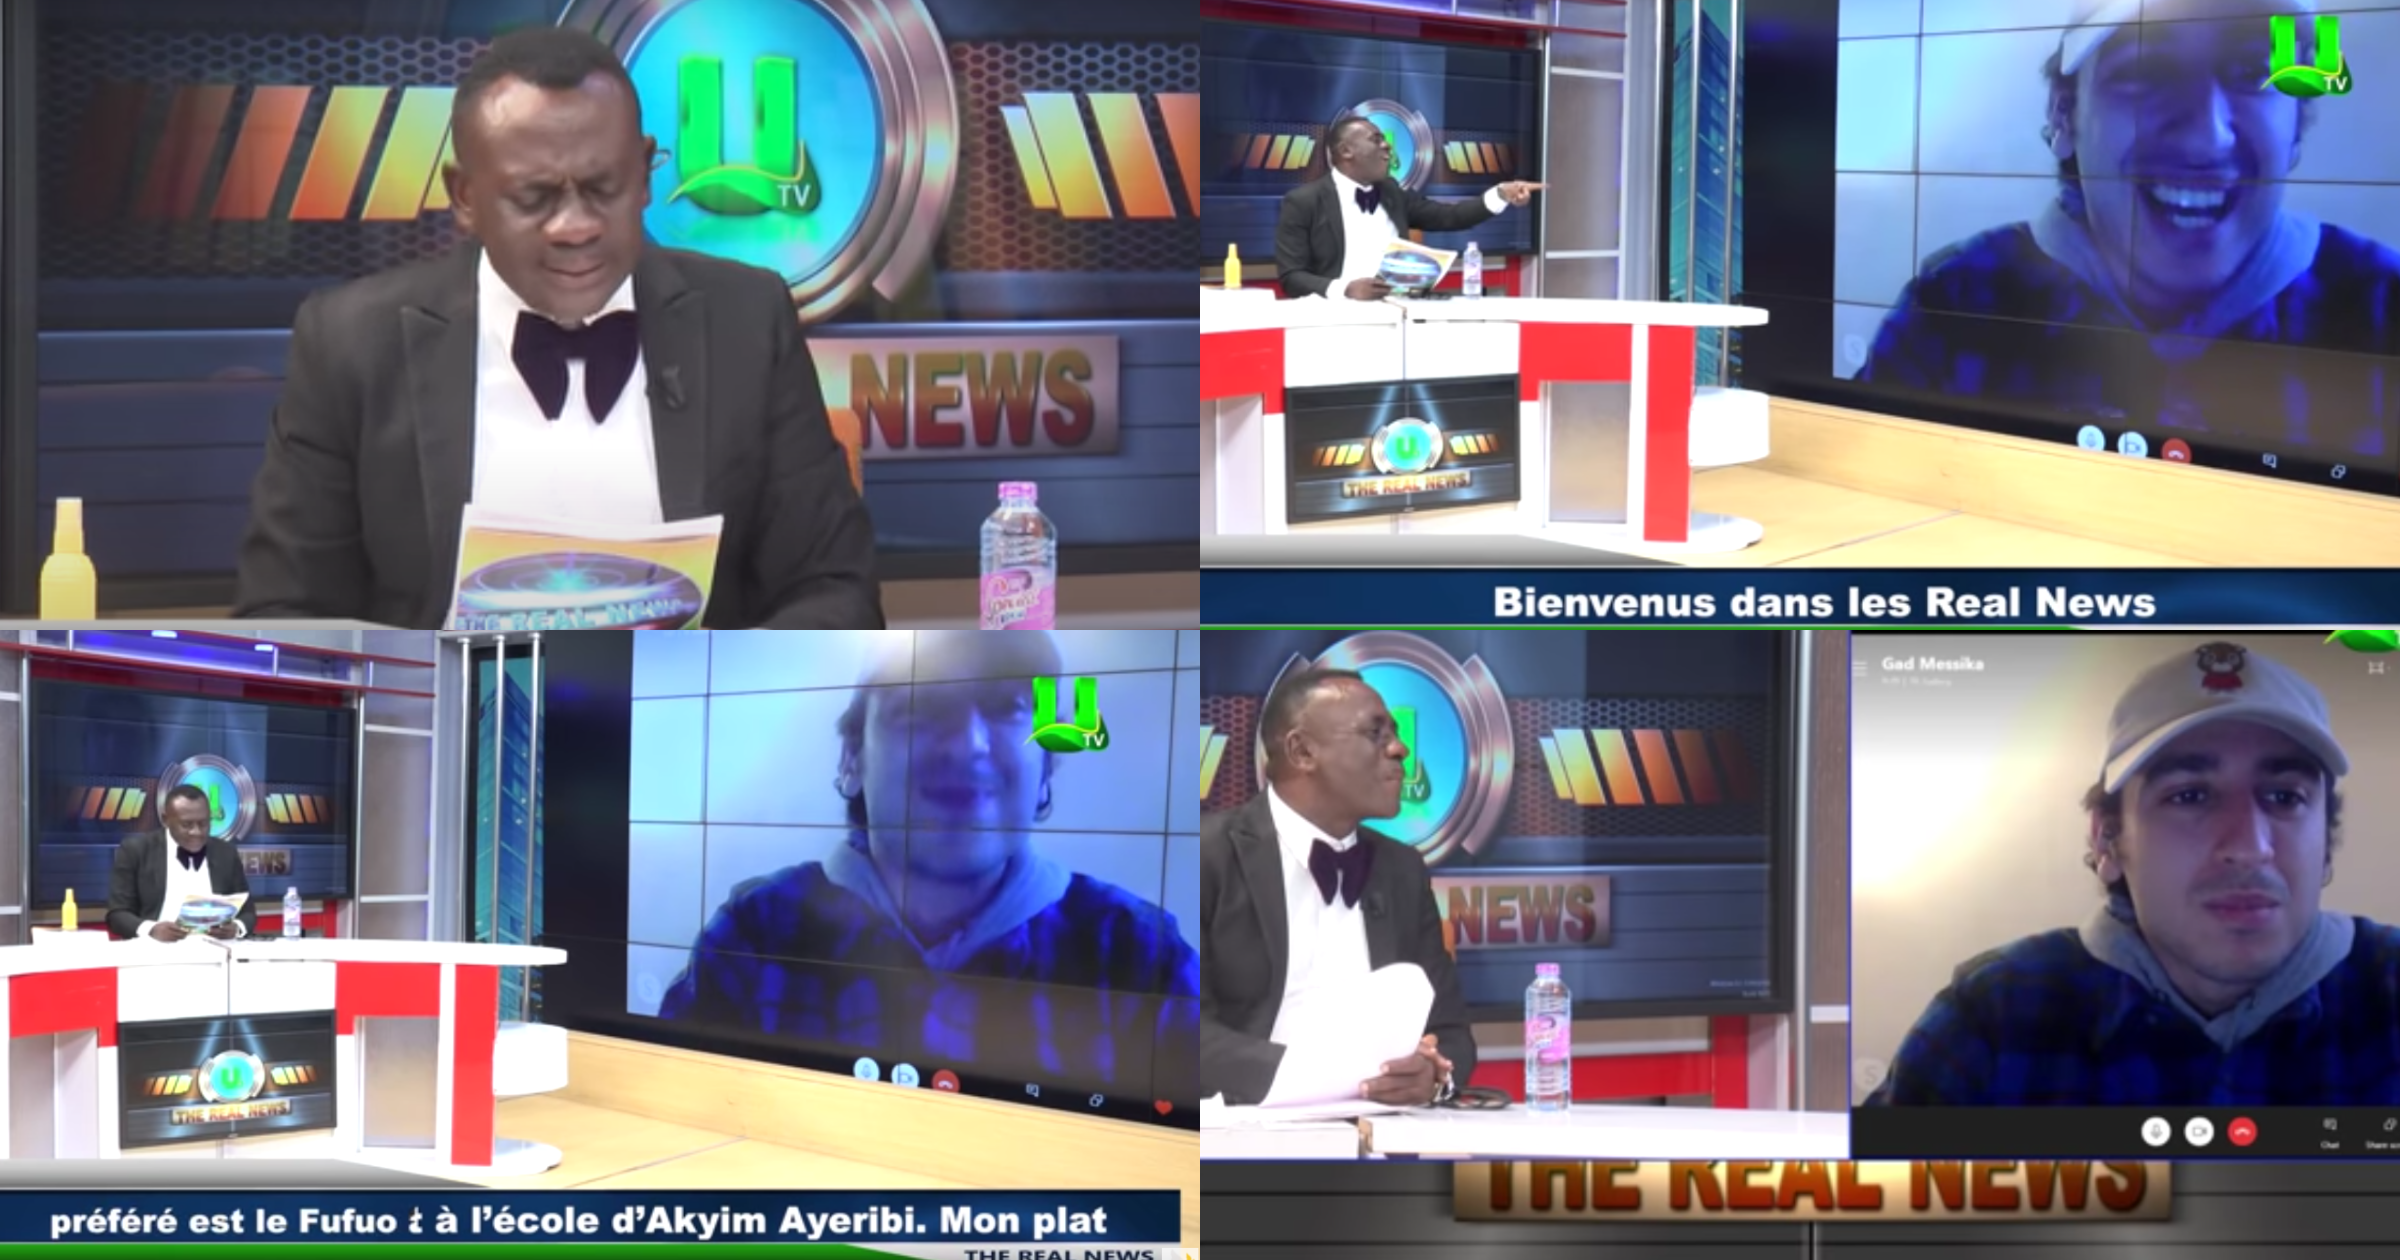 Akrobeto interviews French journalist Gad Messika on UTV; speaks French (video)